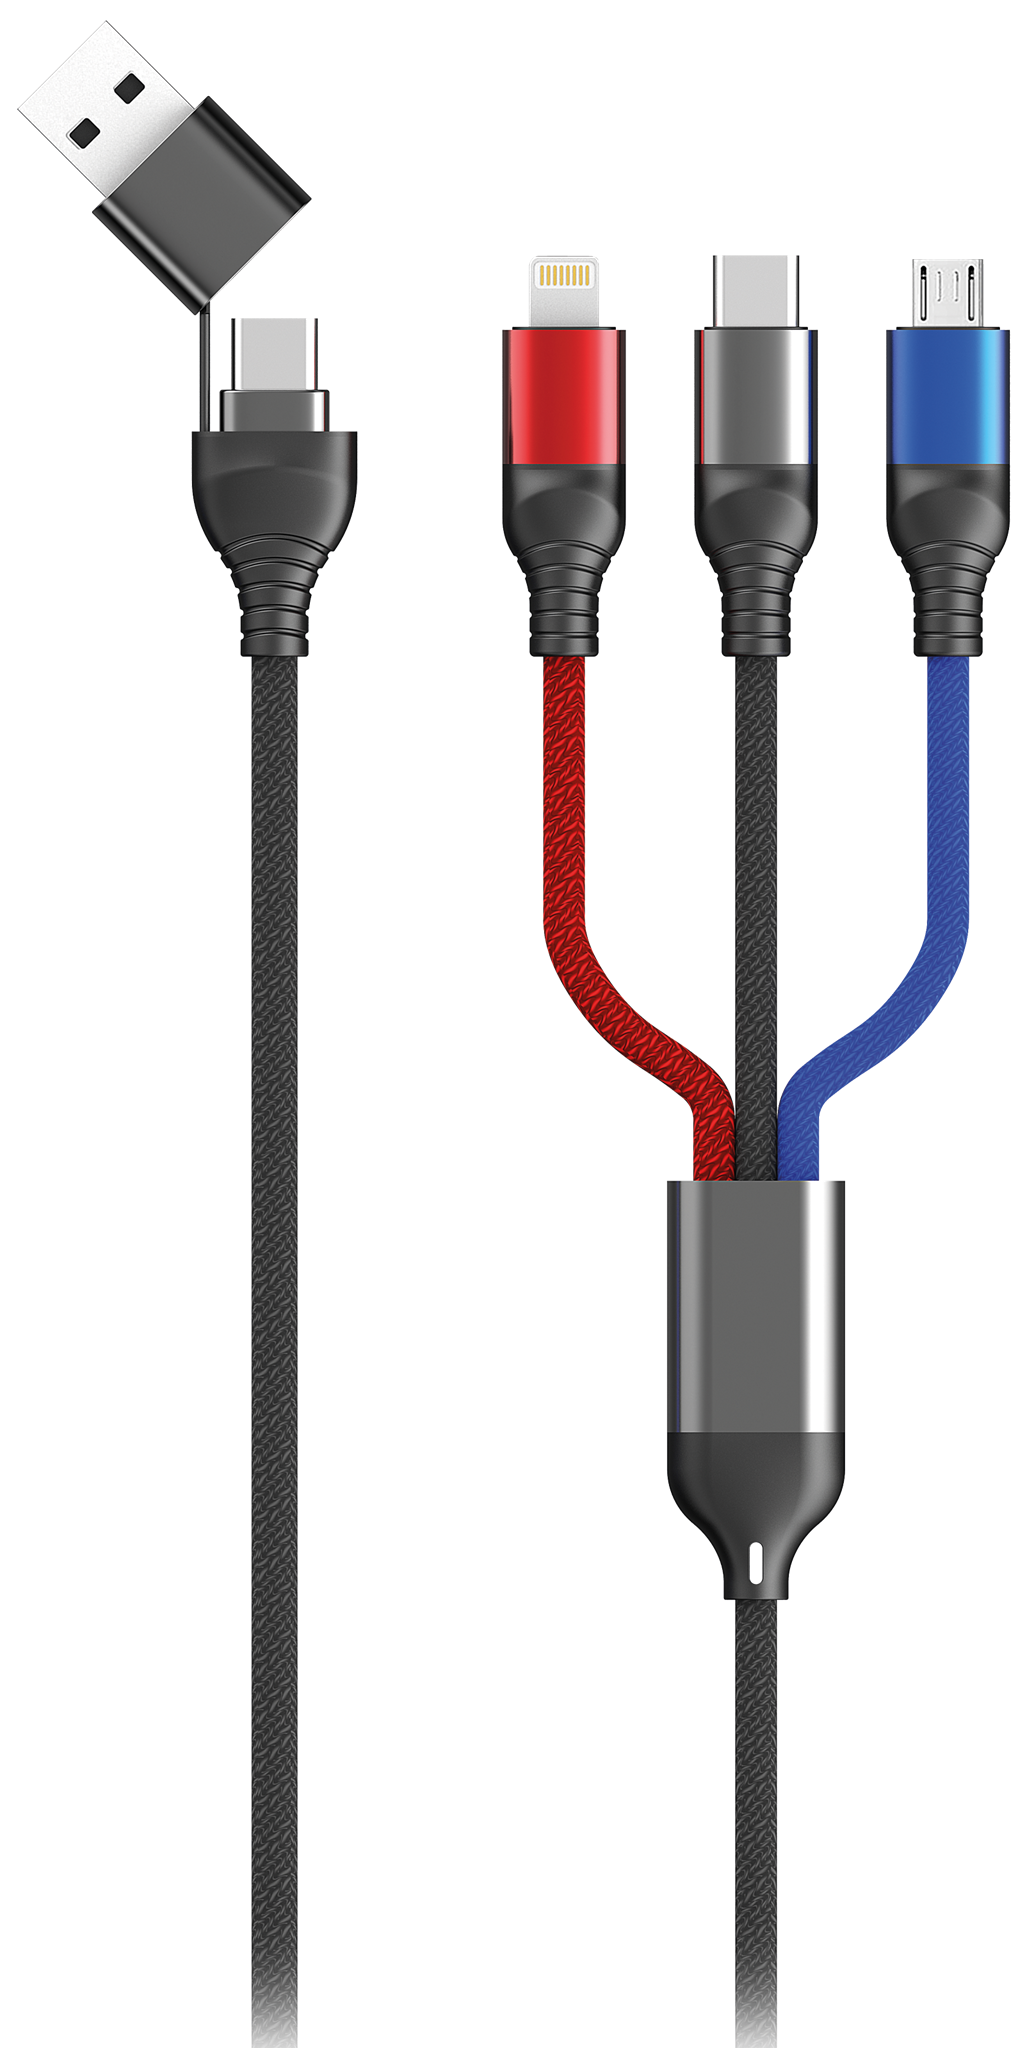 Bild von All in One USB / Type C Ladekabel - colormix - 120cm